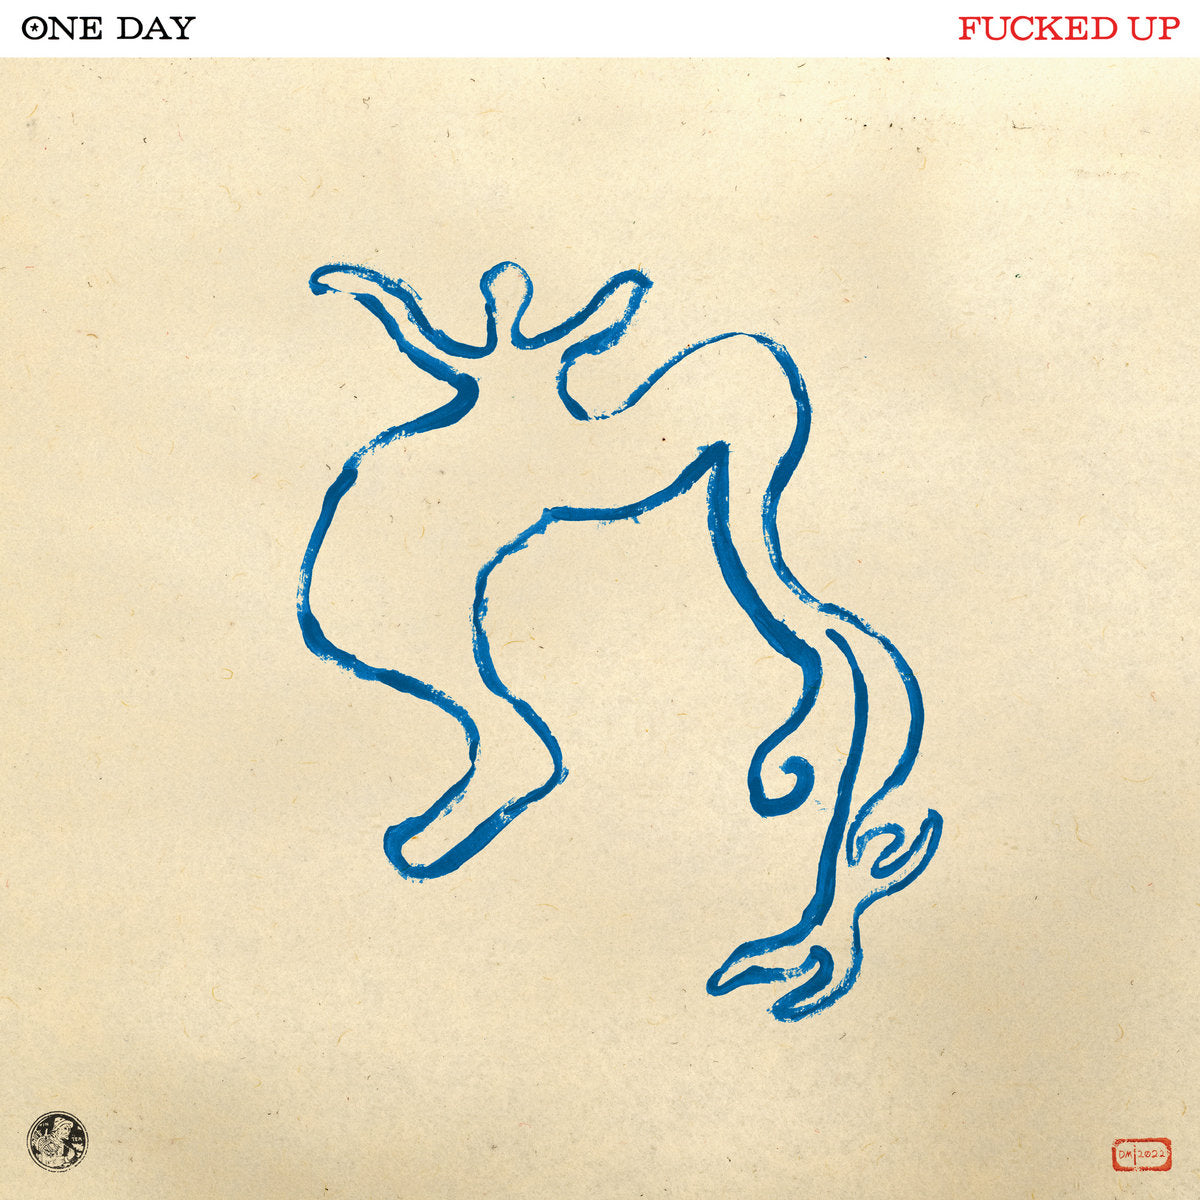 Fucked Up "One Day" 12" Vinyl